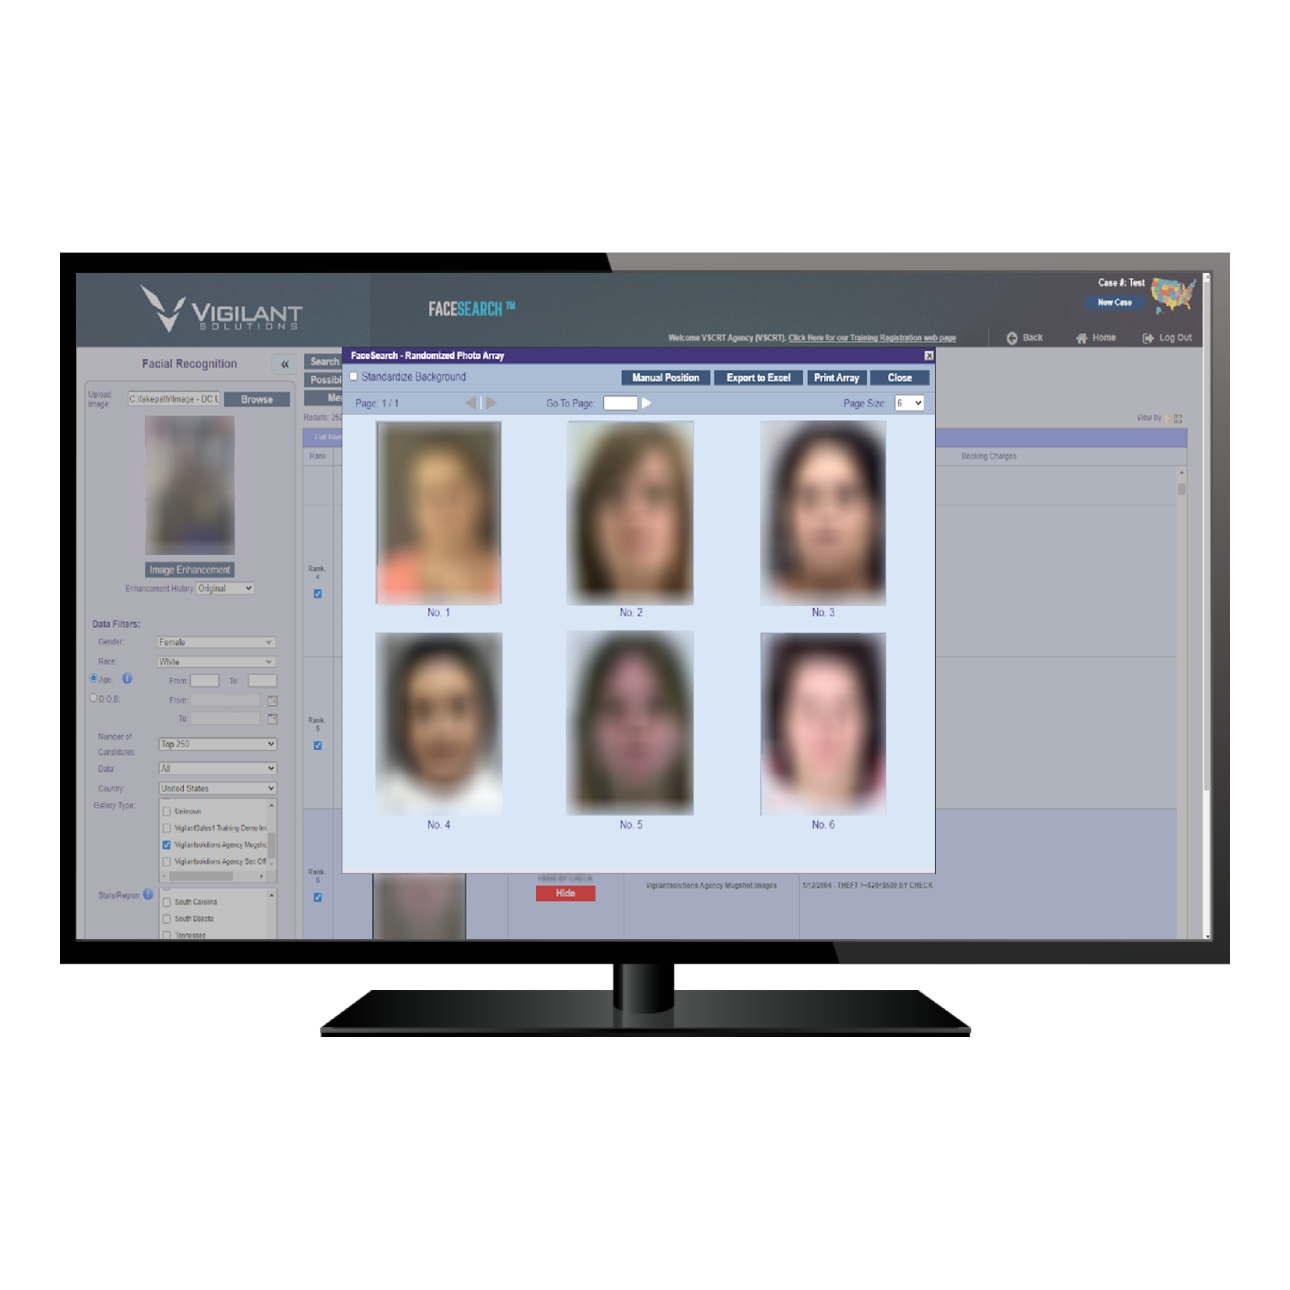 Vigilant FaceSearch randomized photo array